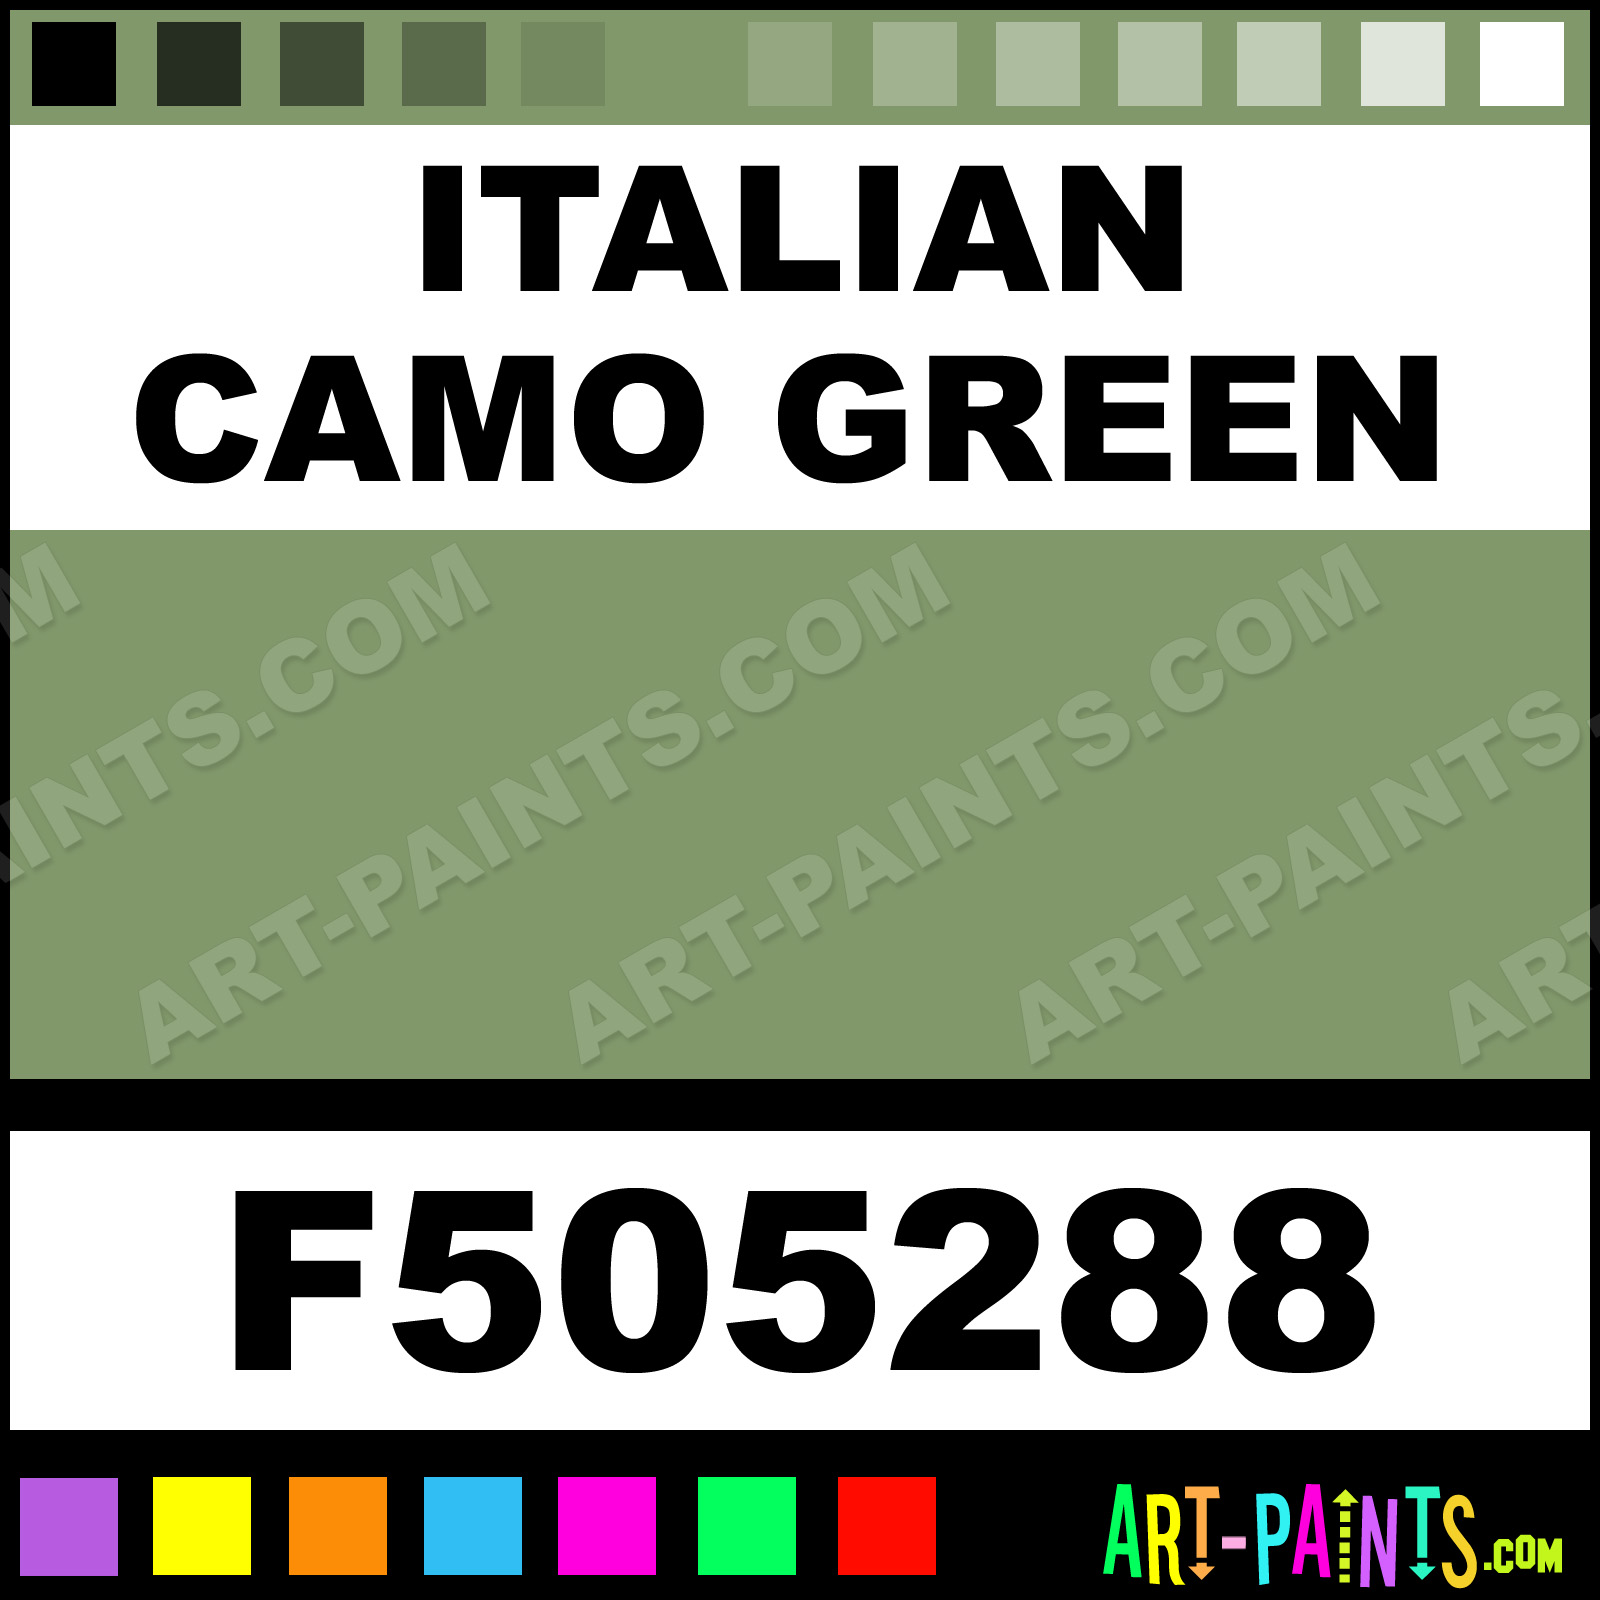 Italian-Camo-Green-xlg.jpg